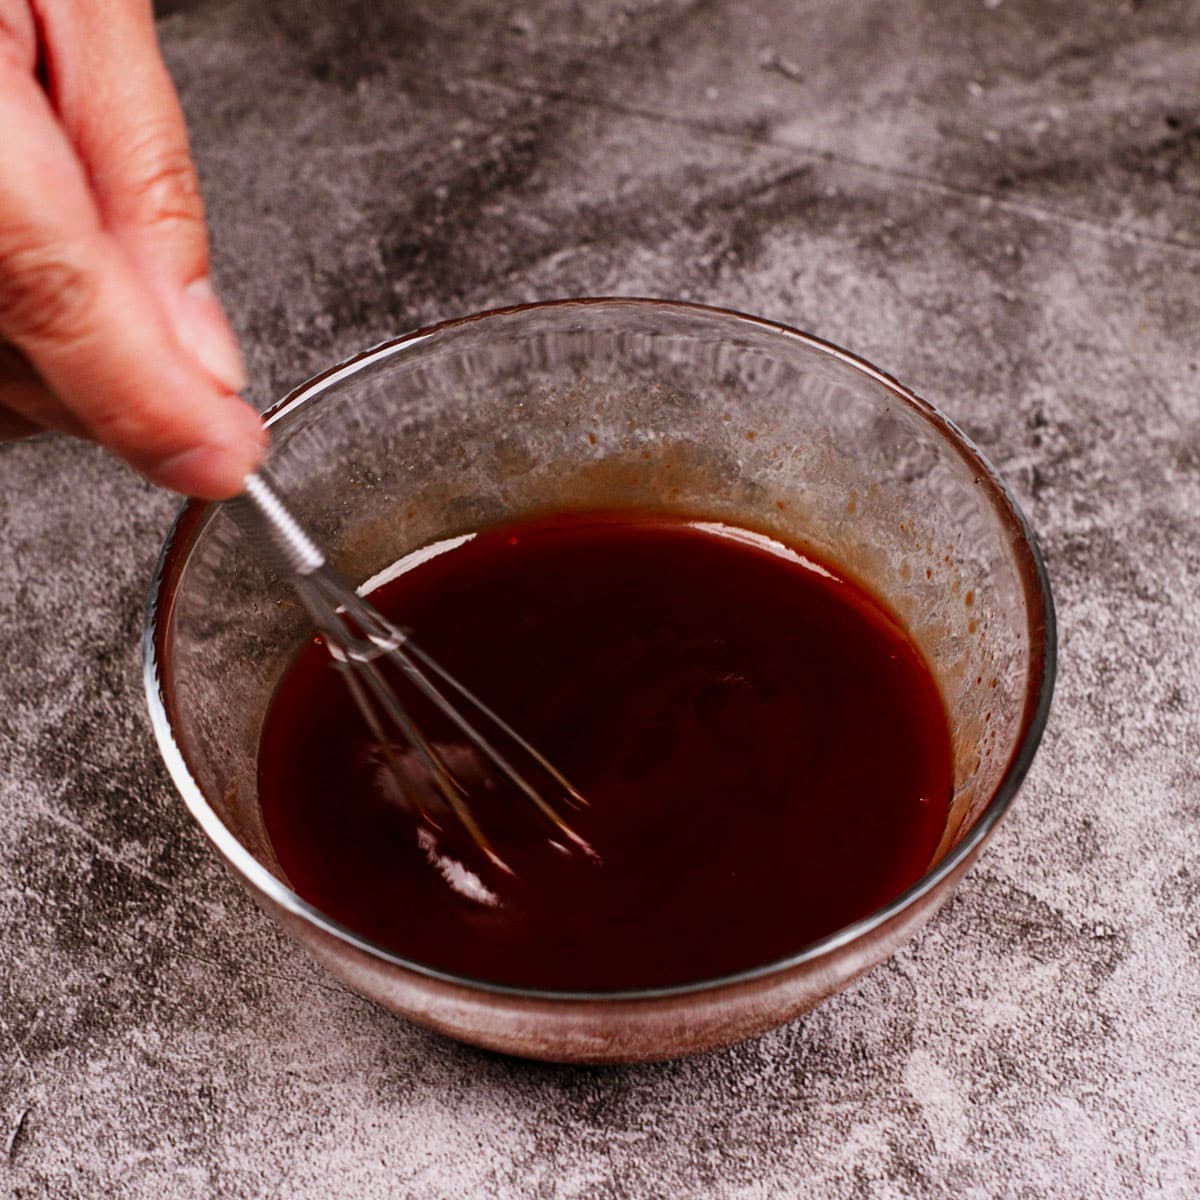 Mixing Tonkatsu sauce in a small bowl